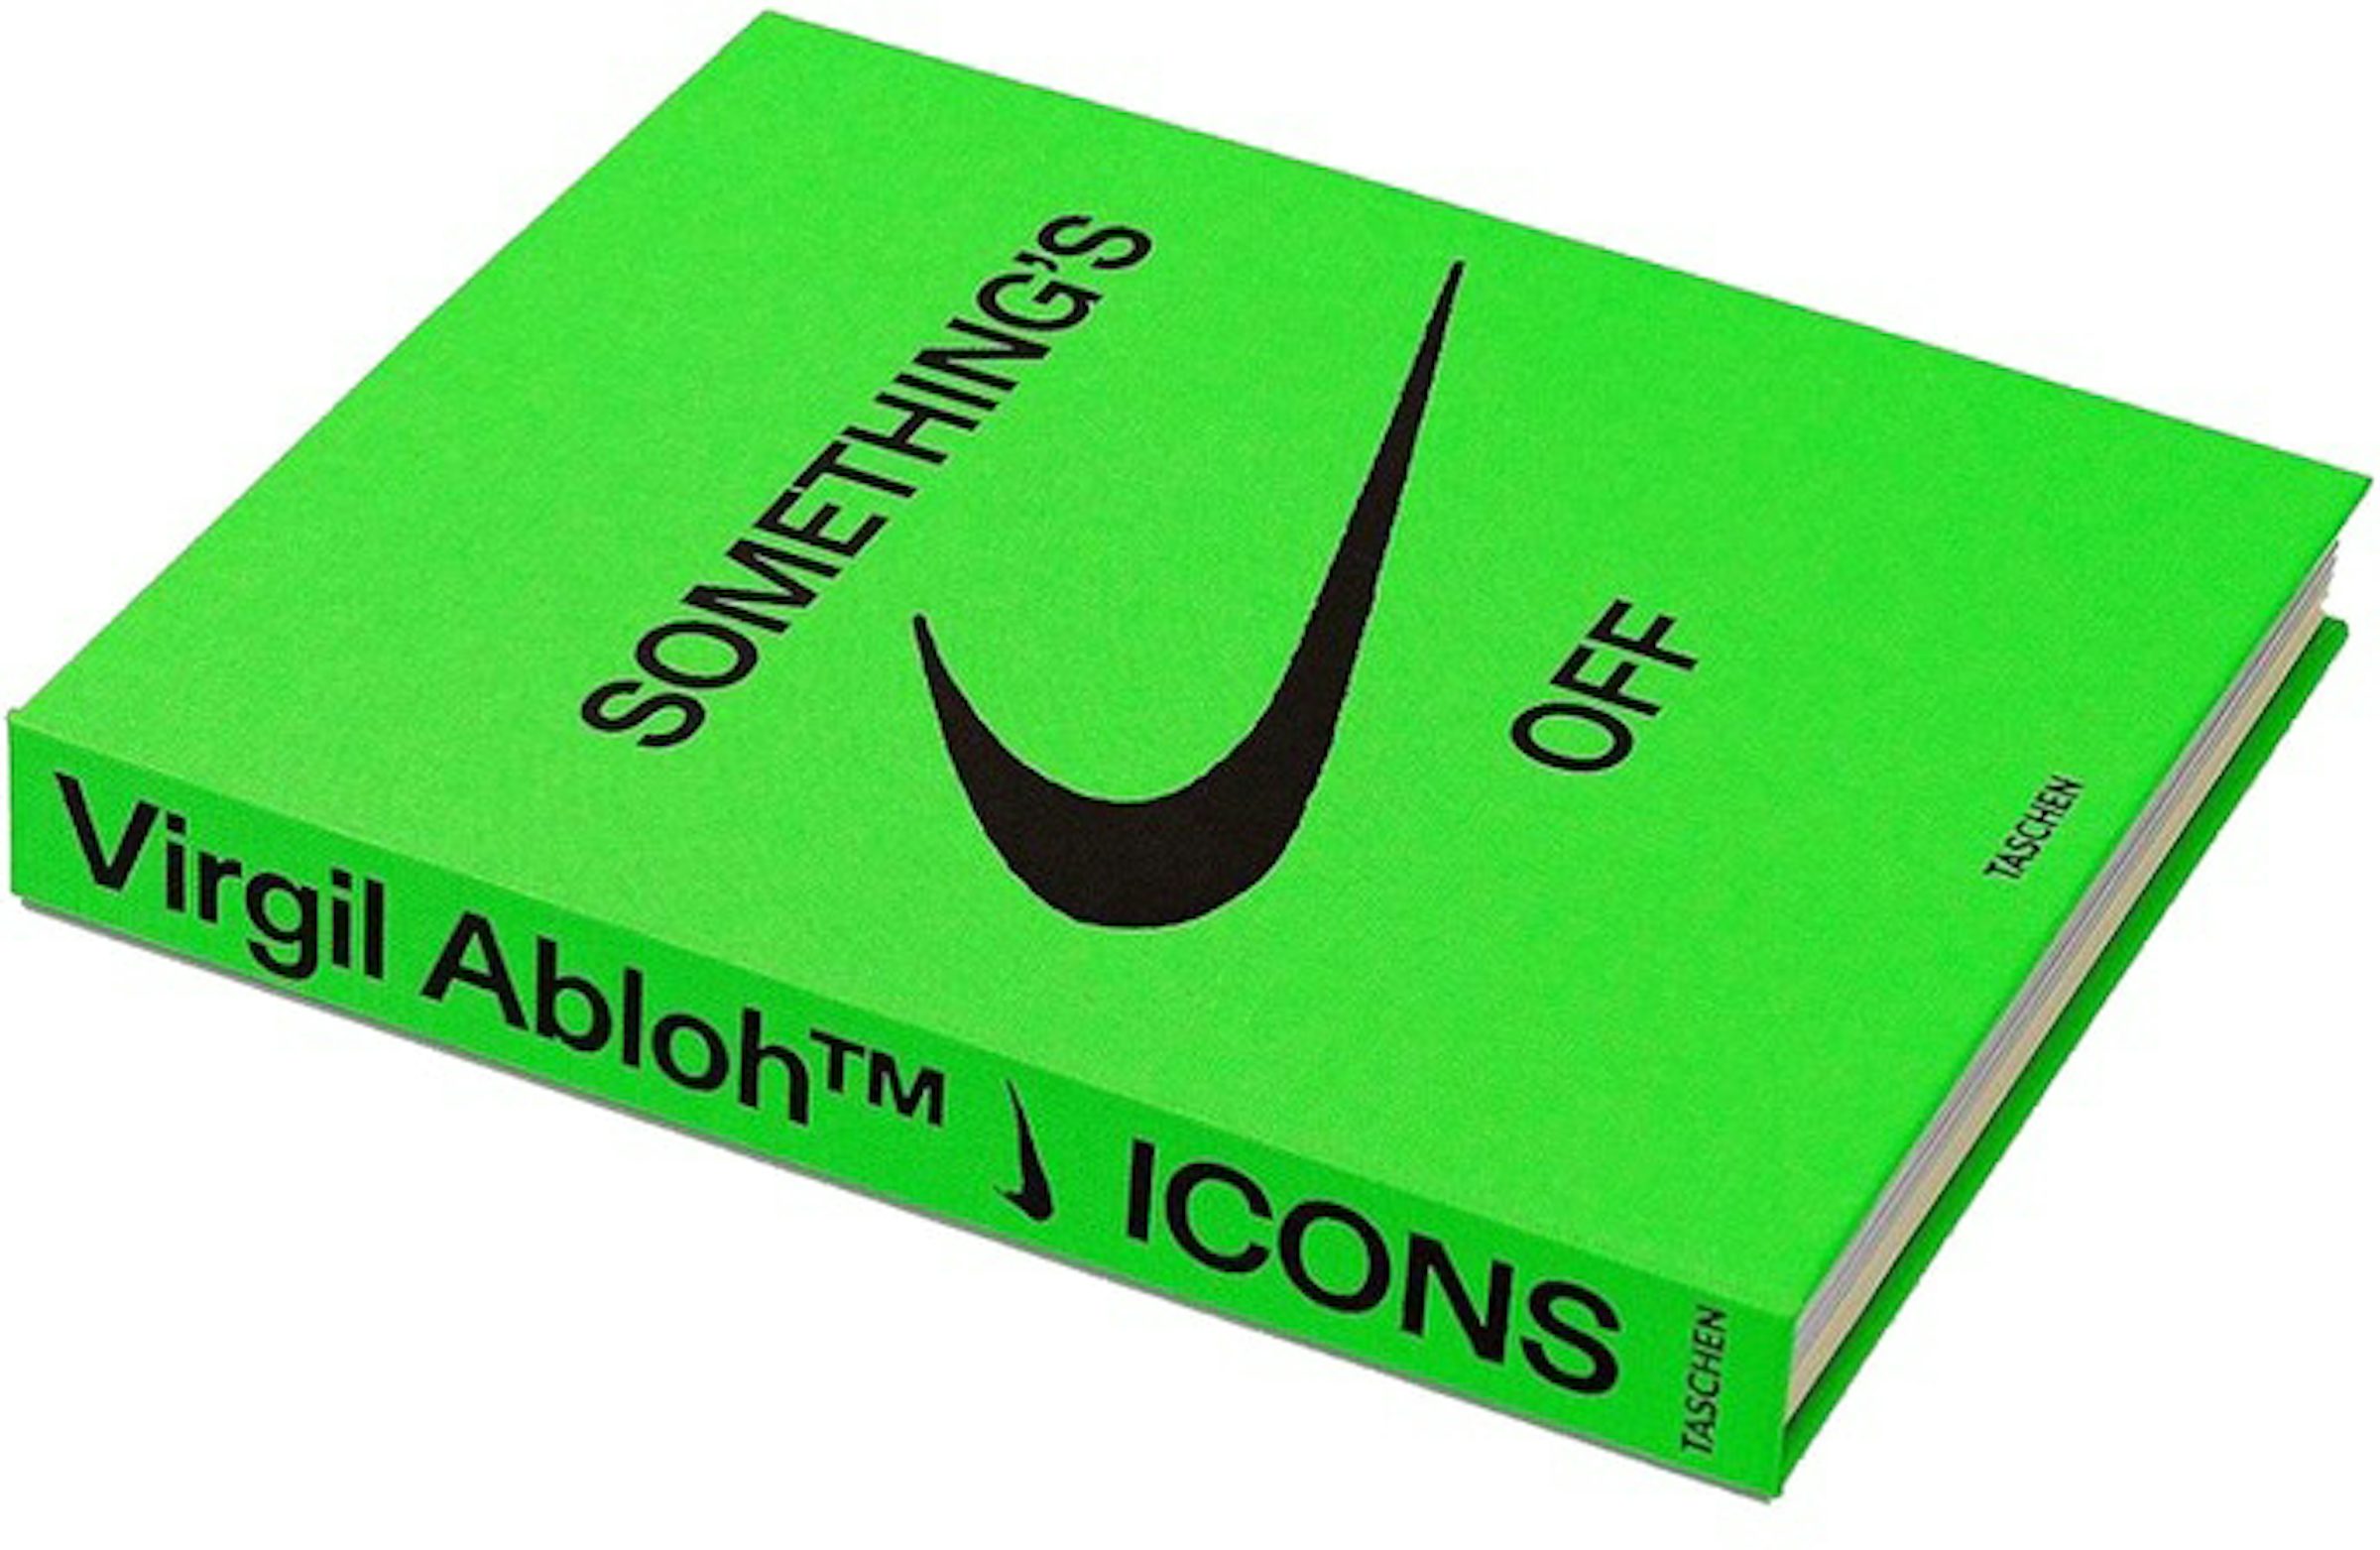 Virgil Abloh x Nike "Something's Off" book 1ST